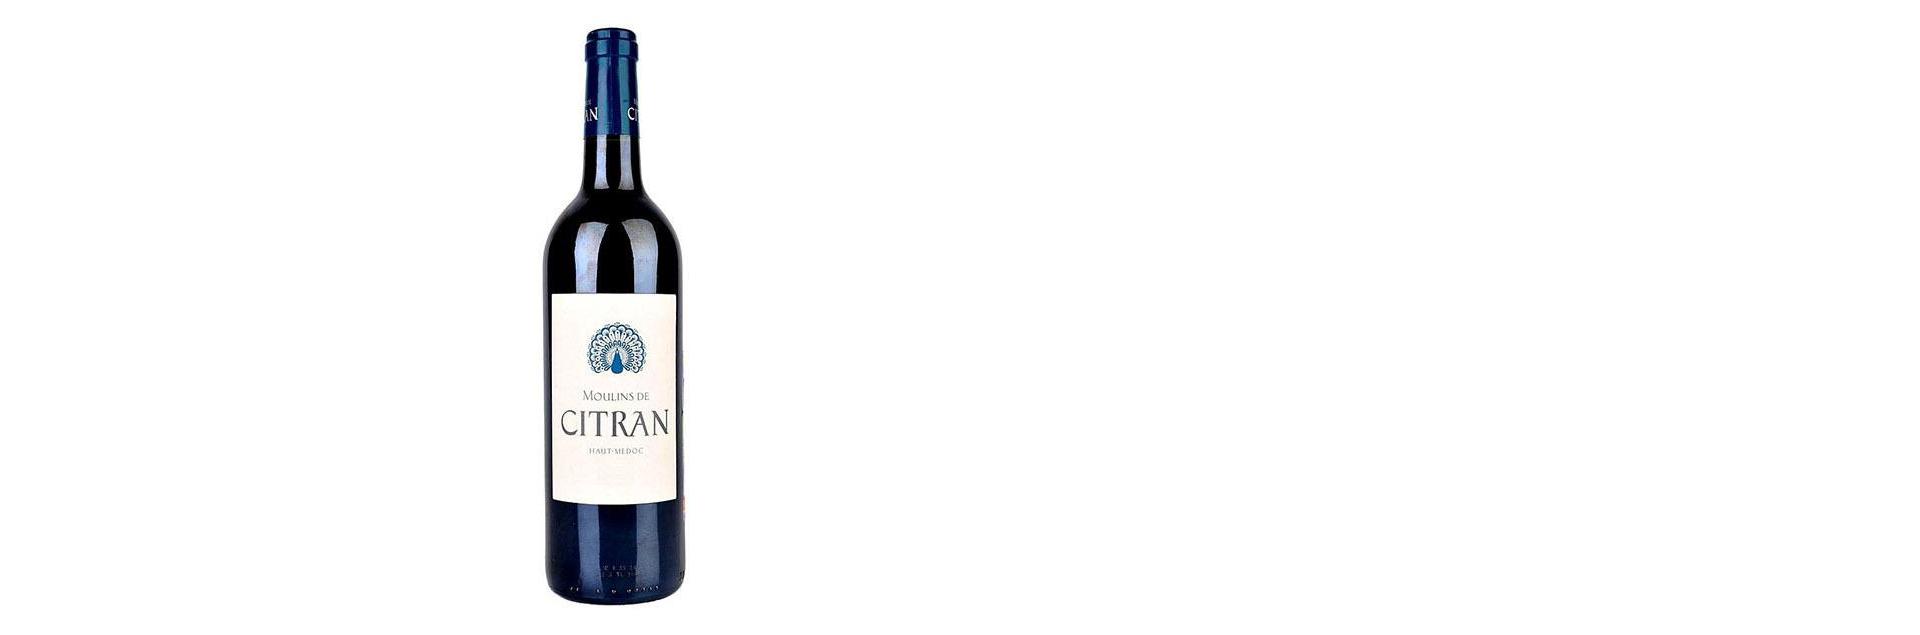 Rượu vang Pháp Les Moulins de Citran 2nd